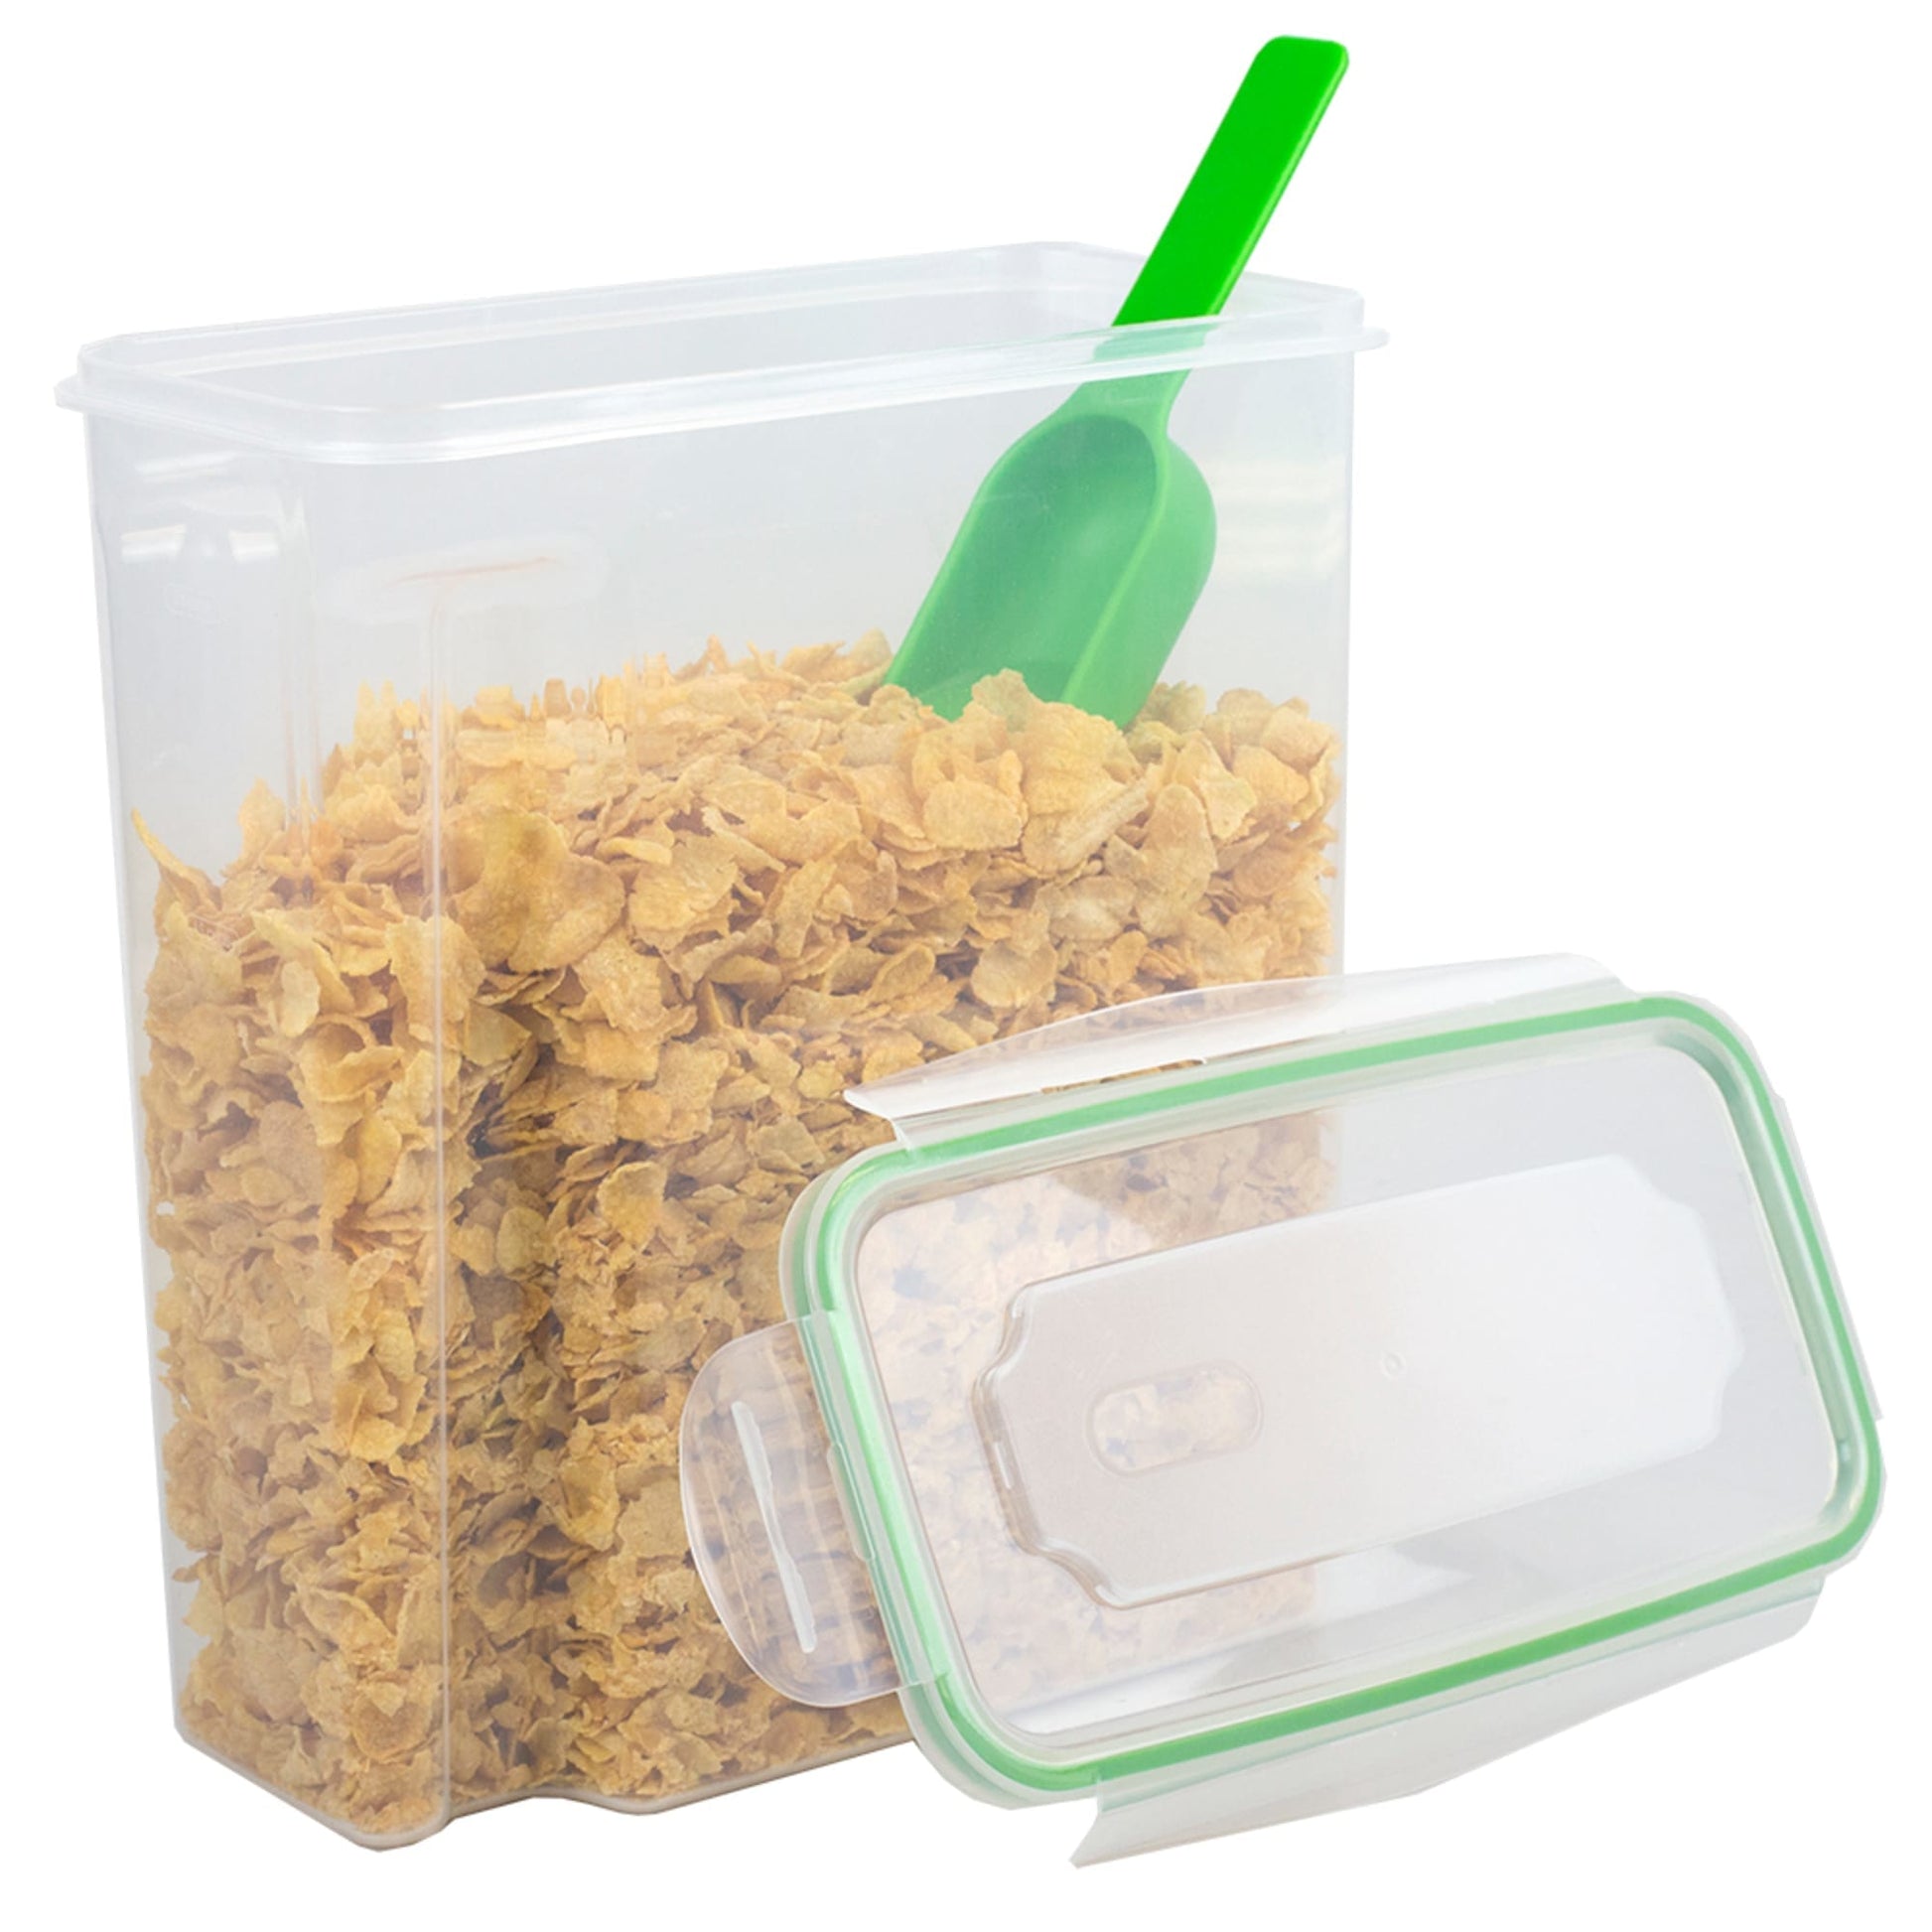 Snapware Slim Rectangle Airtight Food Storage with Fliptop Lid, 1